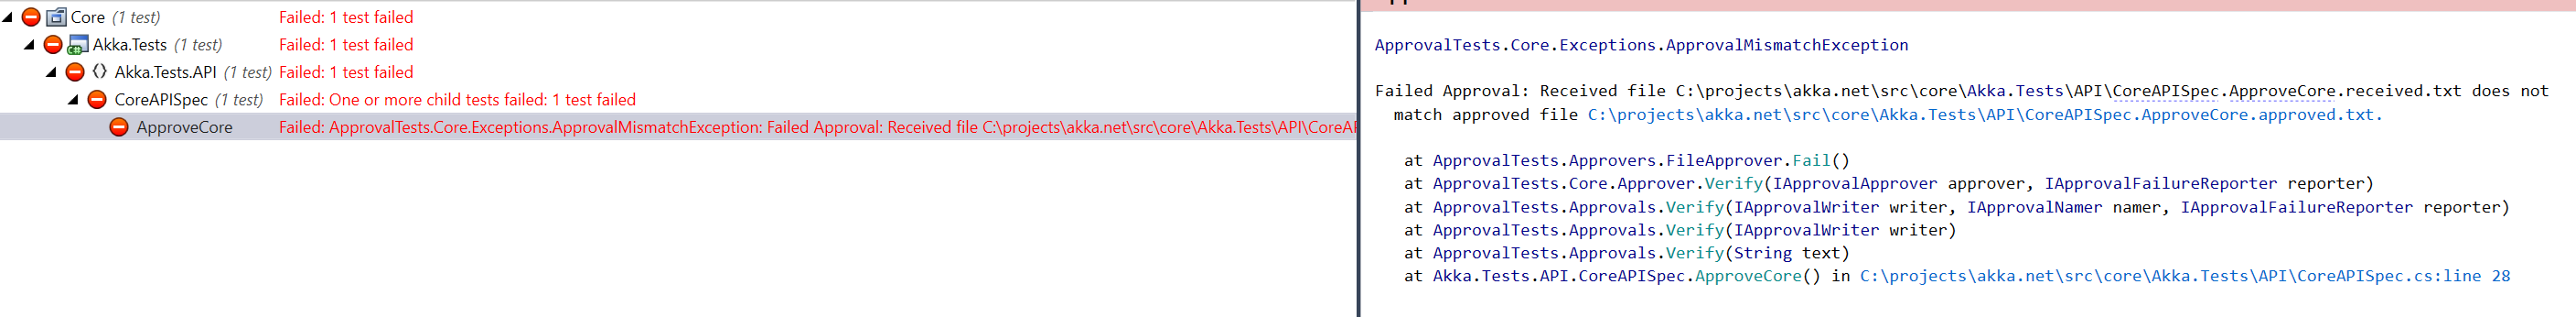 Failed API approval test